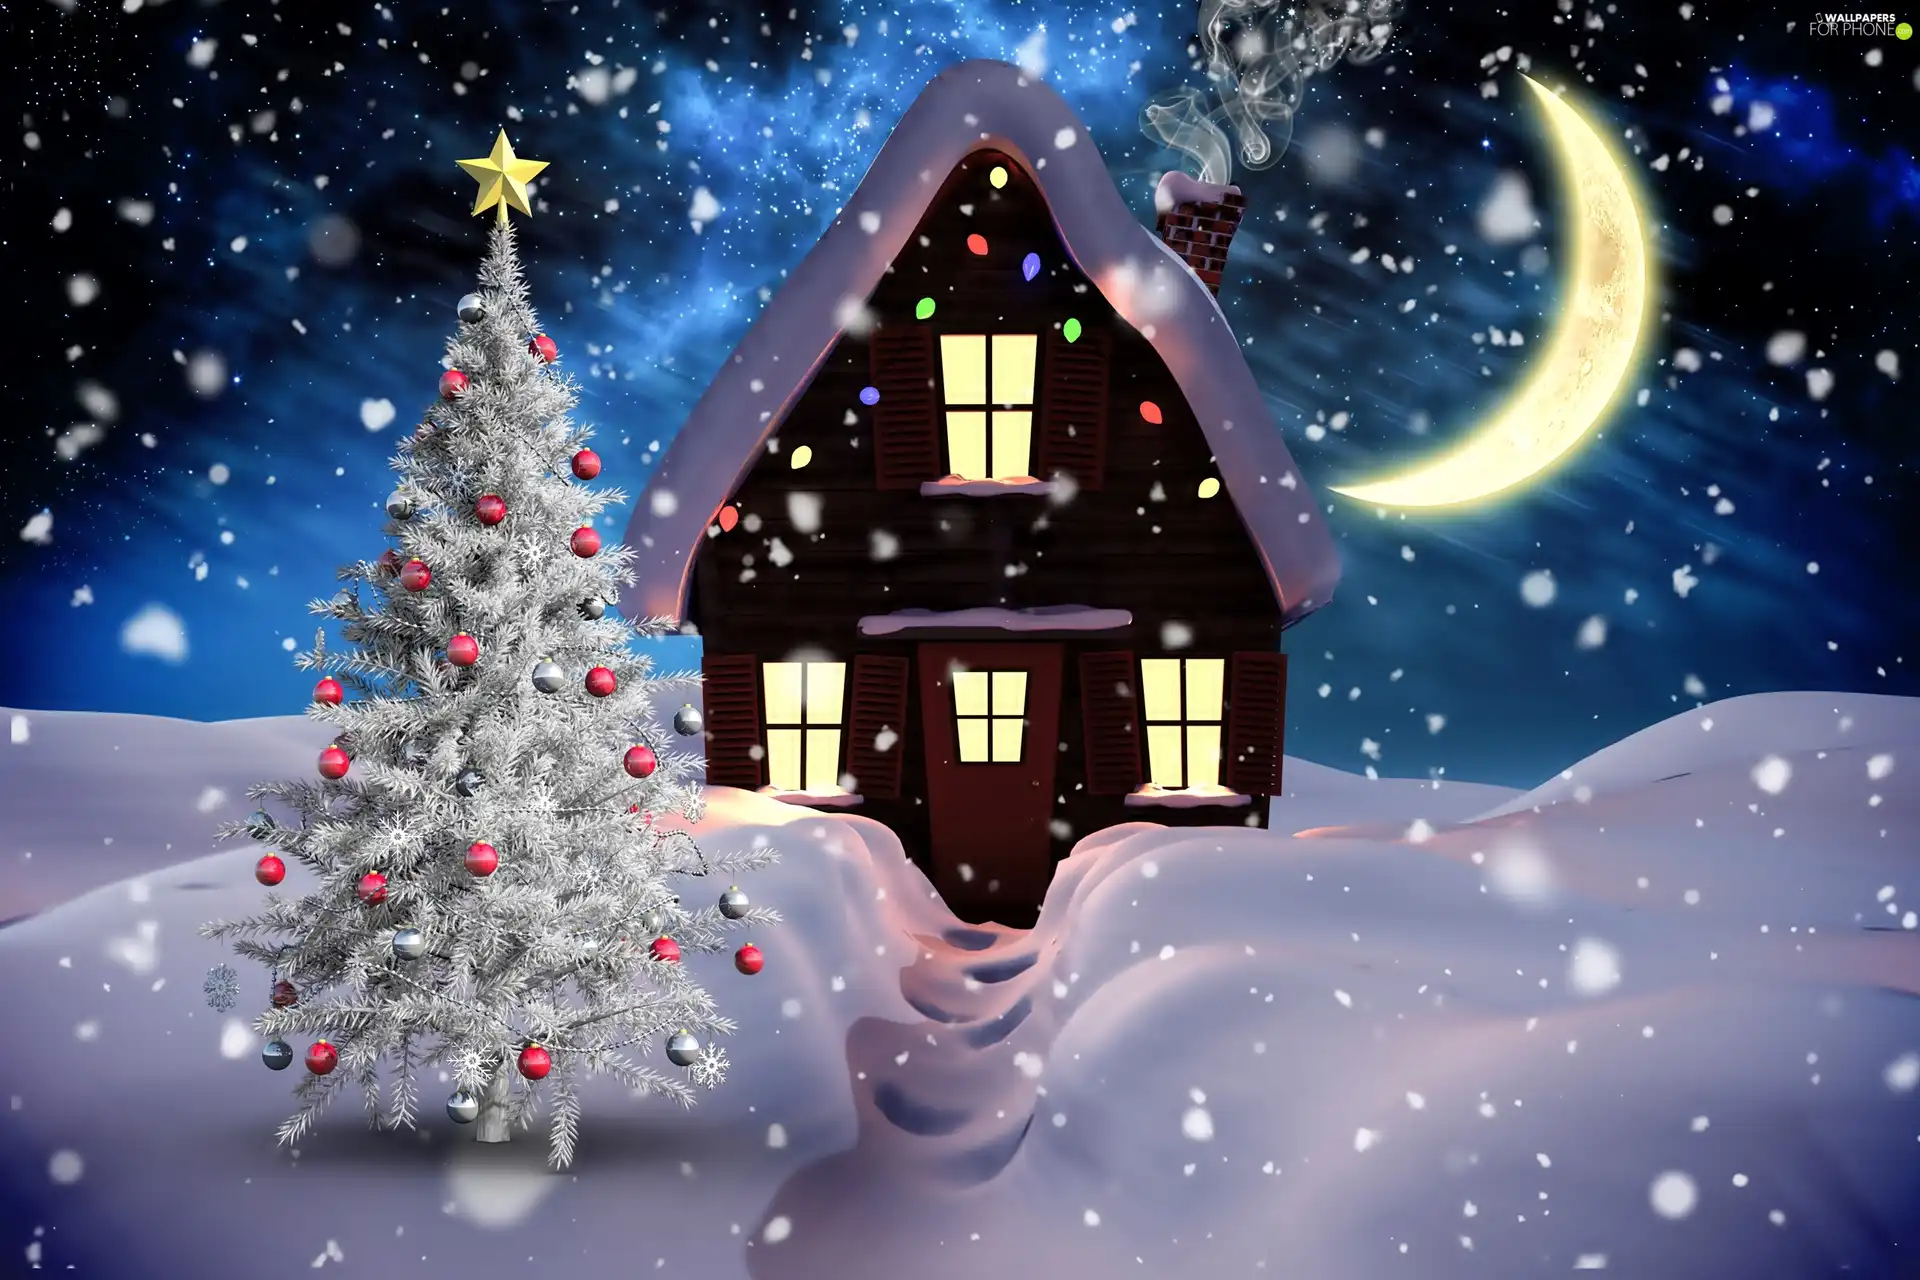 moon, winter, house, Night, christmas tree